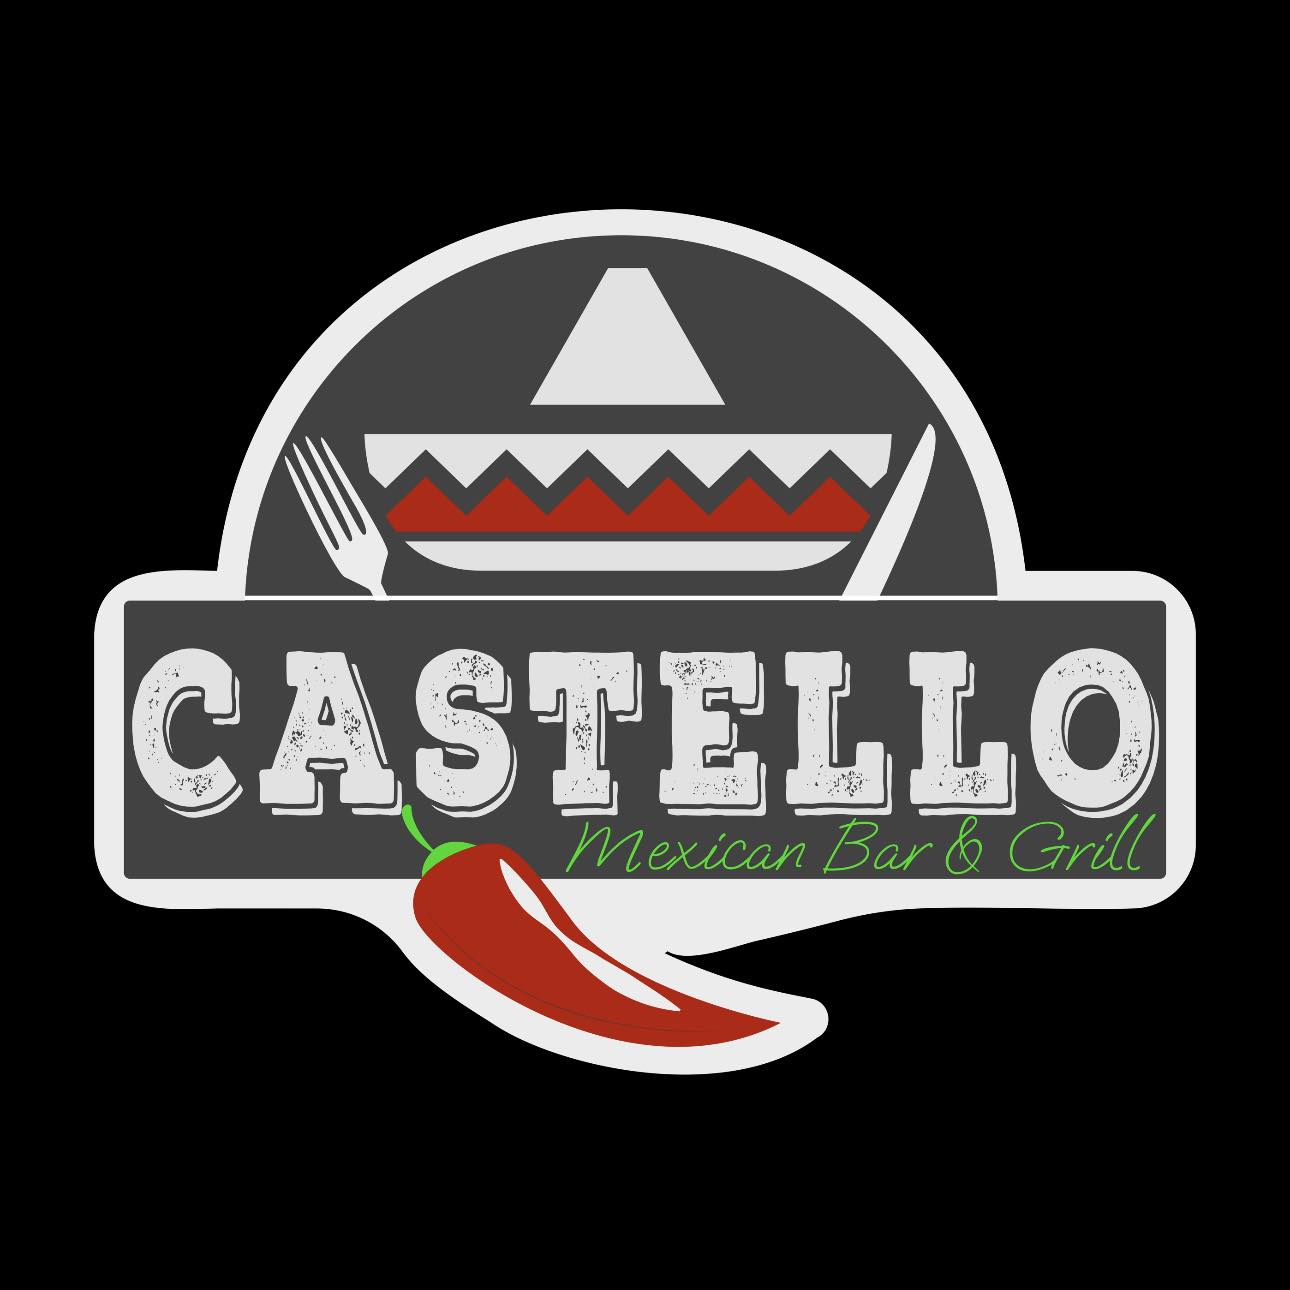 Castello Mexican Bar & Grill